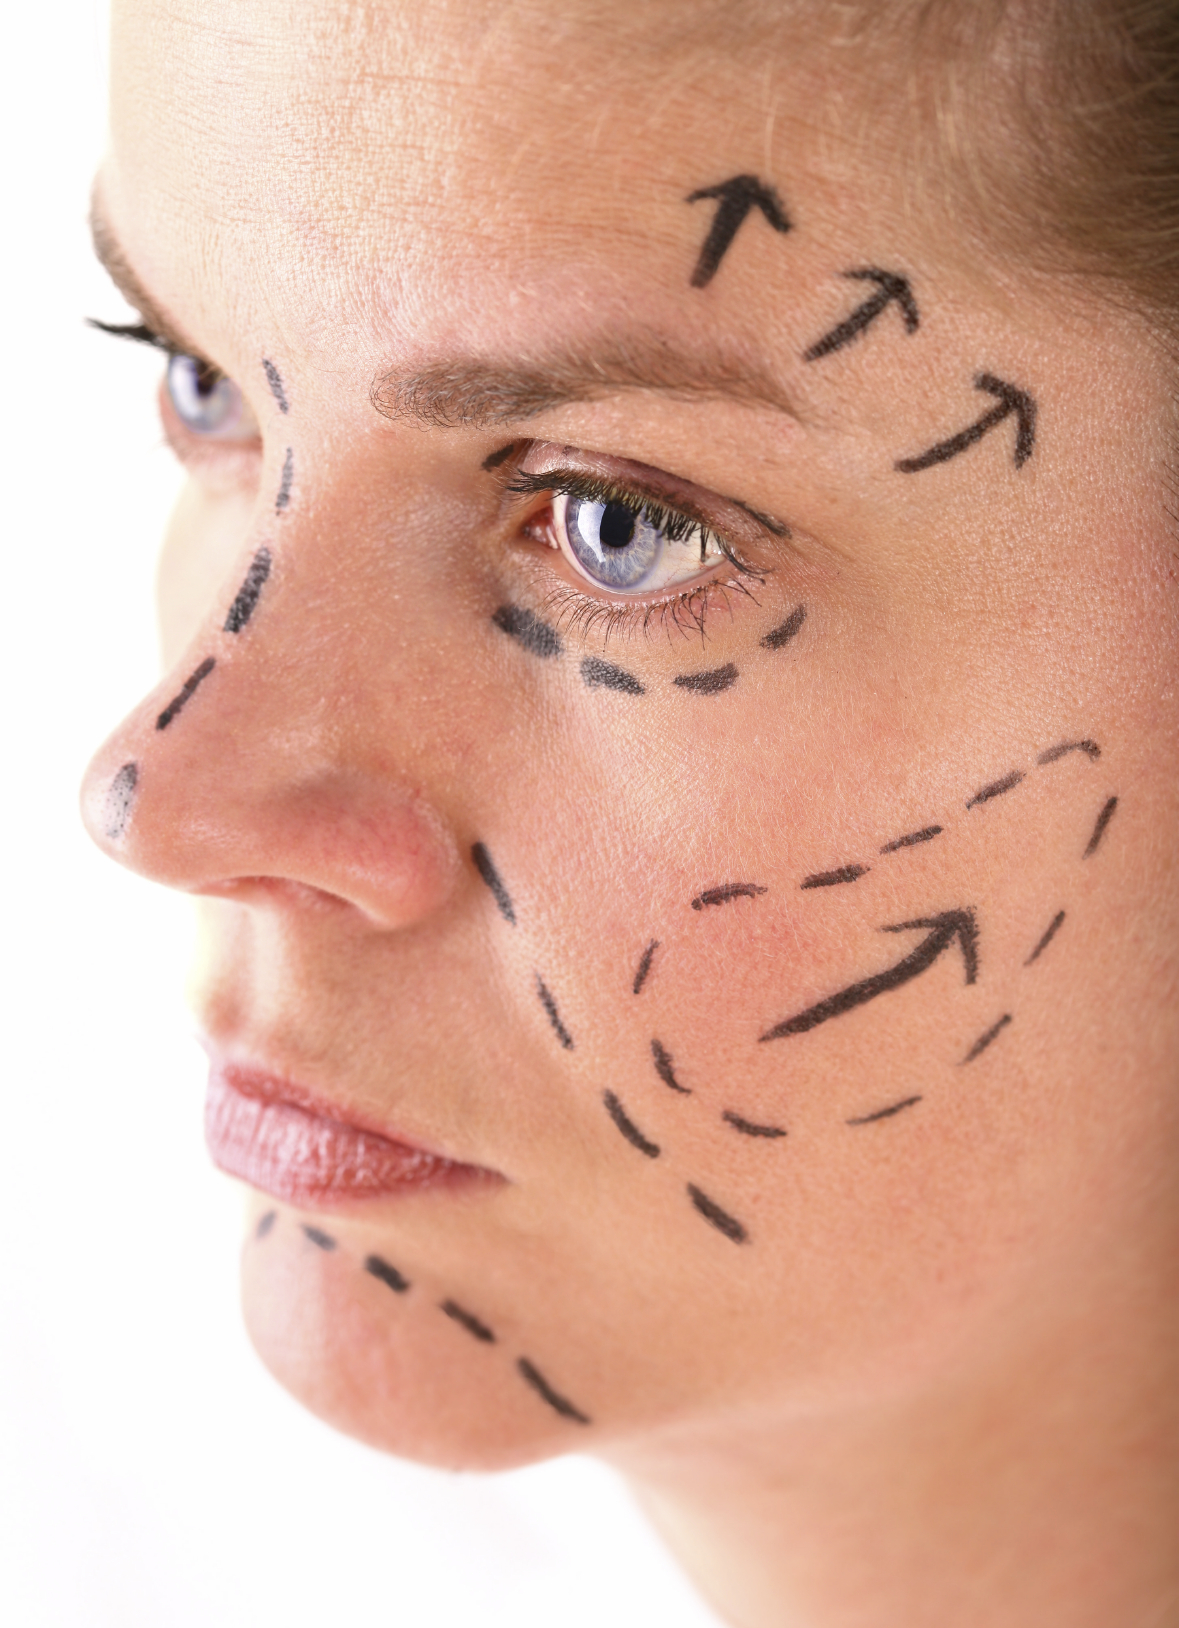 Facial Plastic Surgery Photos 20